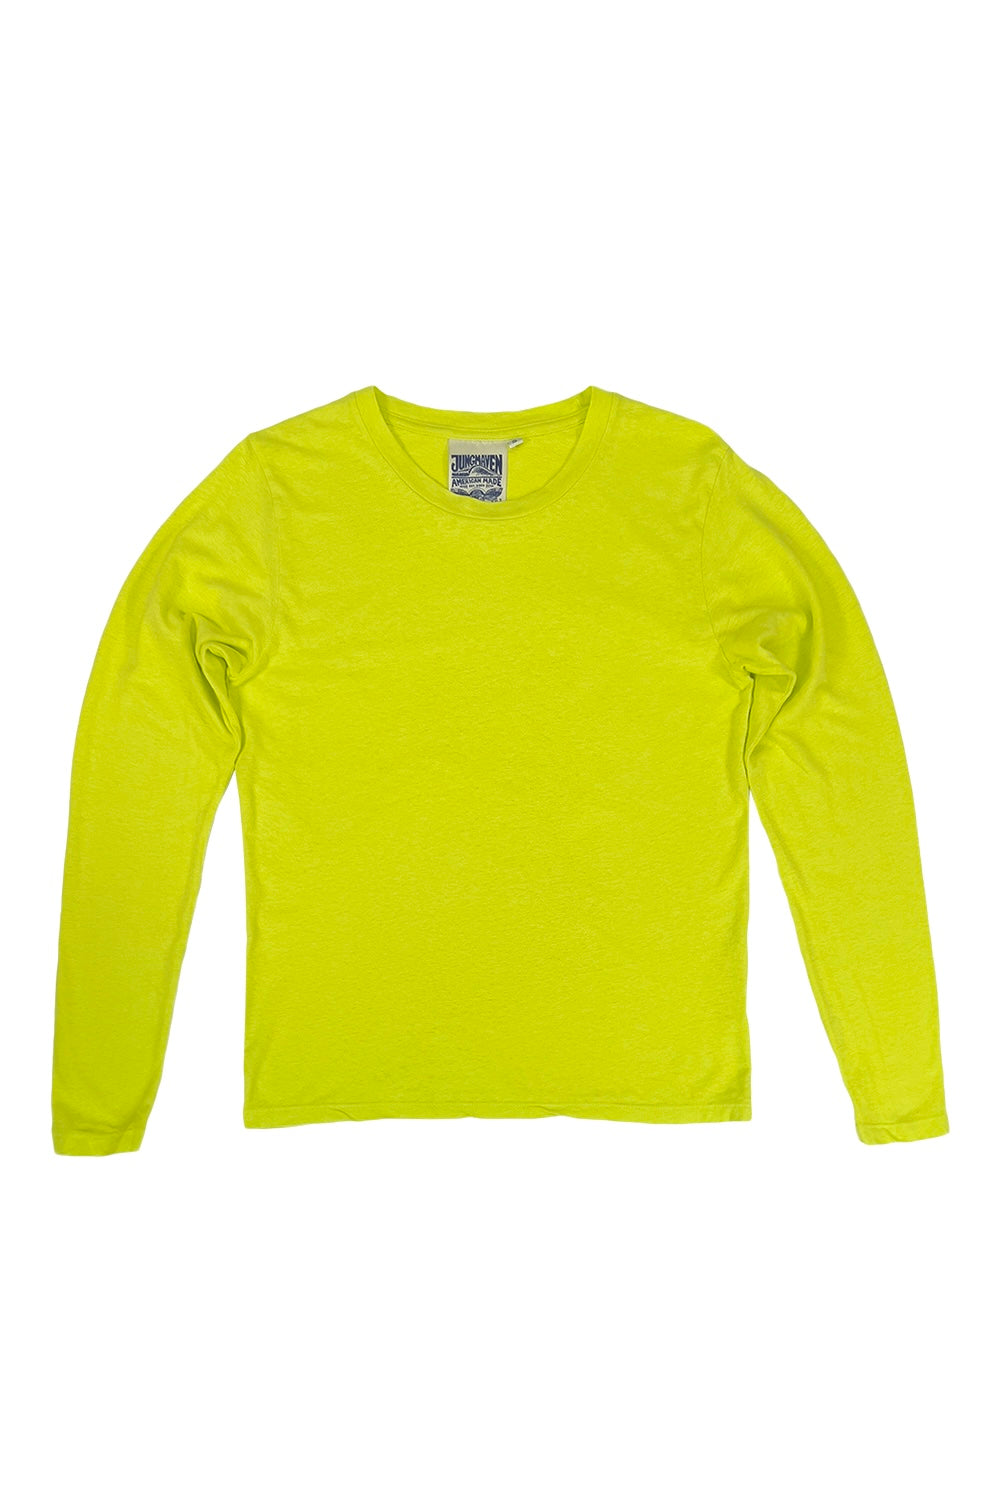 Replay Long sleeved top - neon yellow 